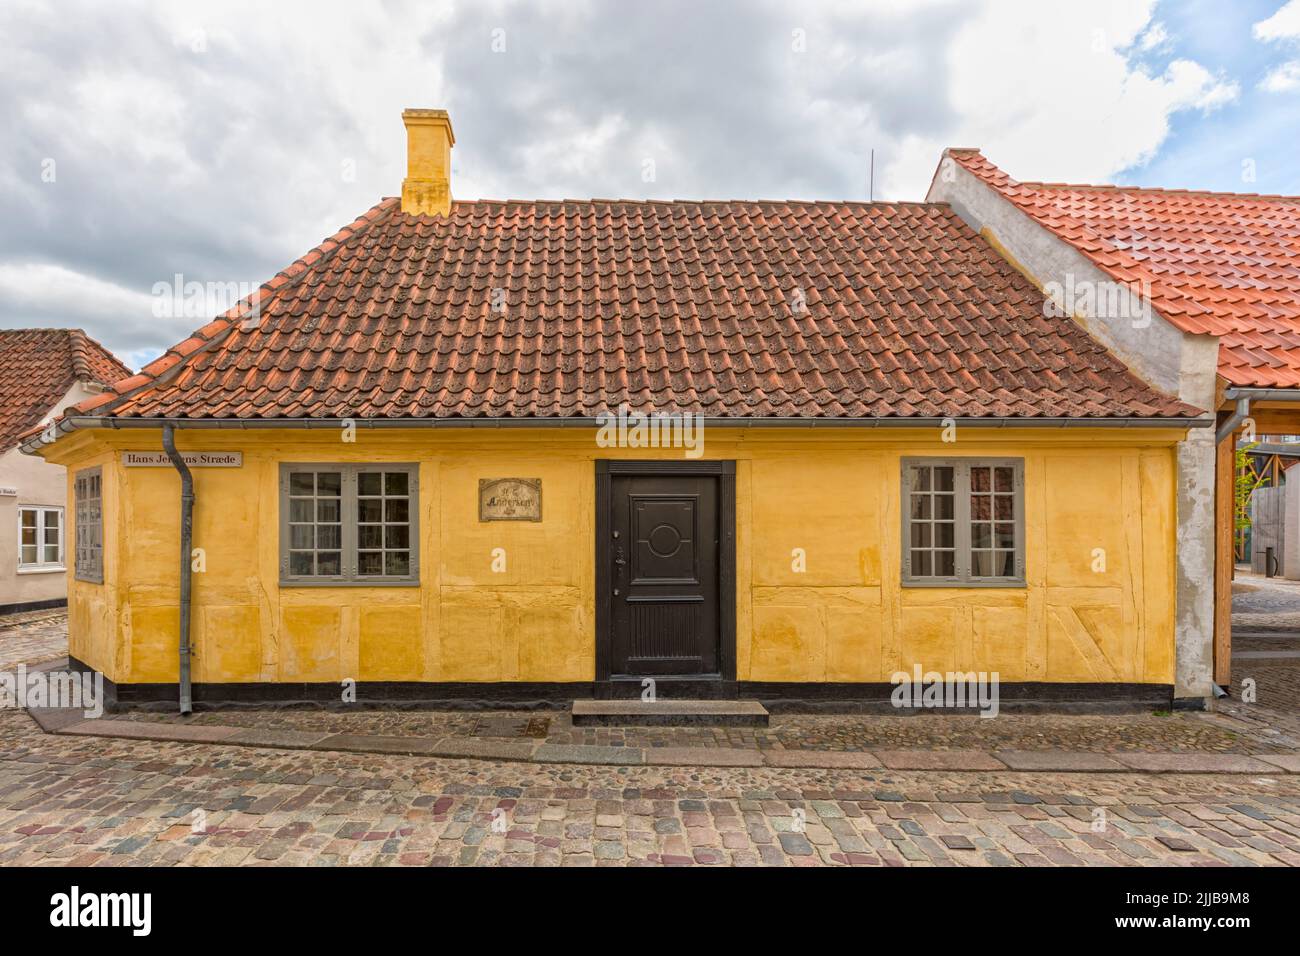 Hans Christian Andersens Geburtsort in der Altstadt von Odense, Dänemark Stockfoto